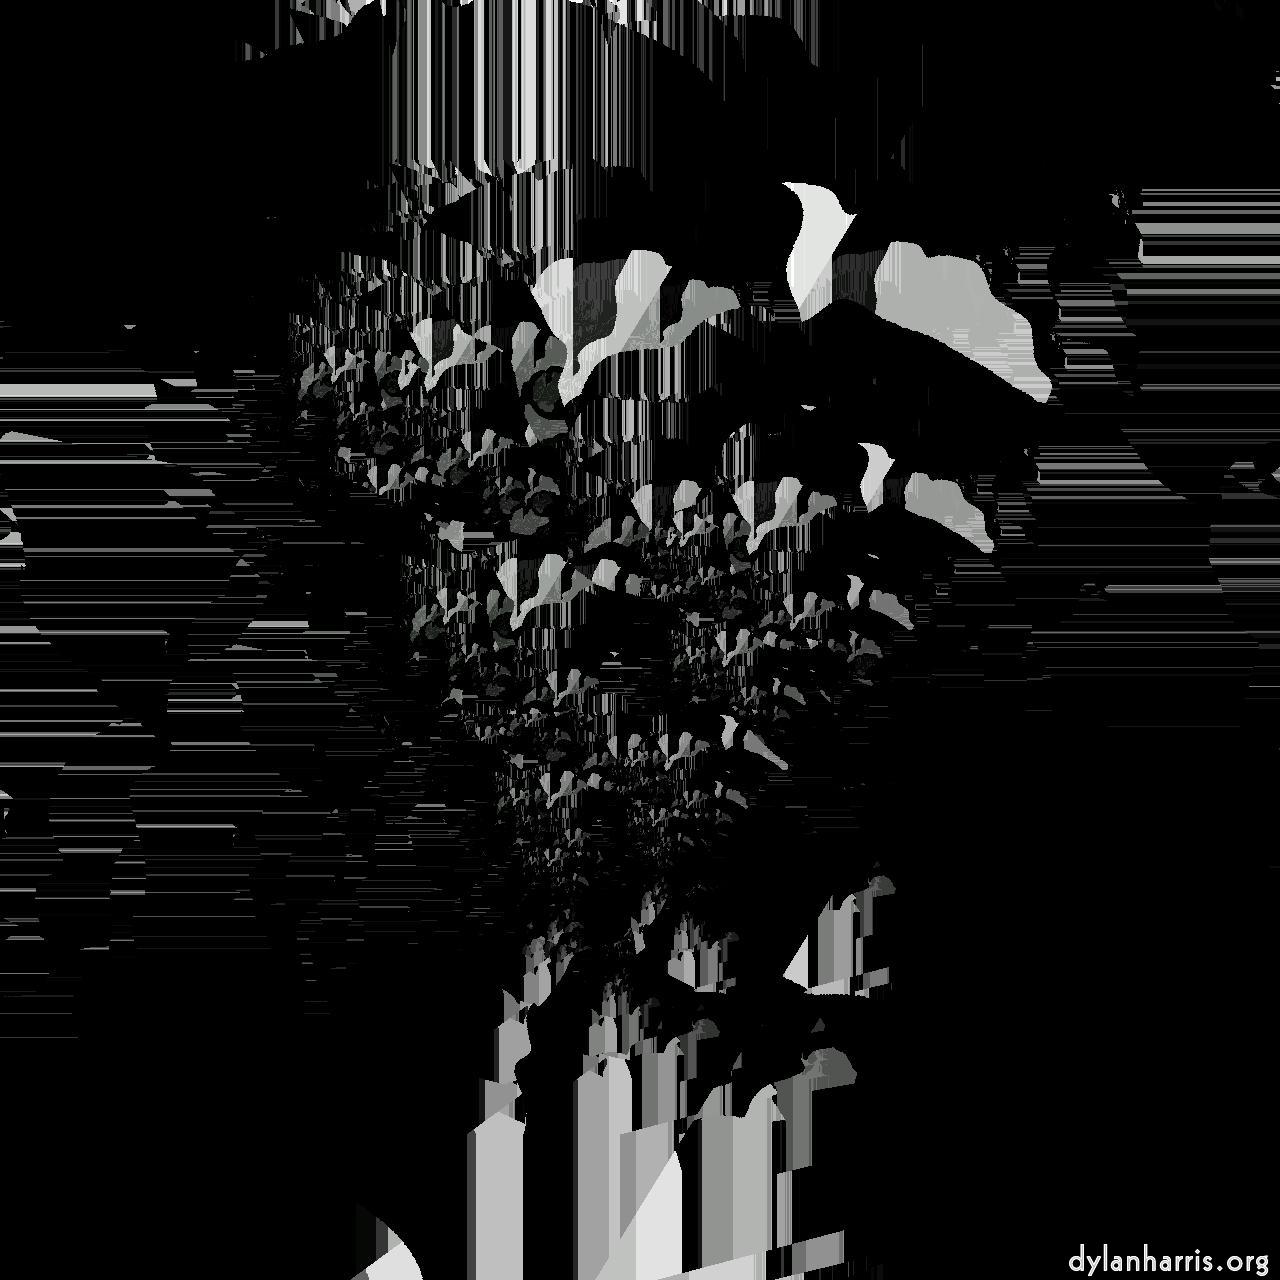 image: grunge - chopped - mutilated - warped :: fractal shapes